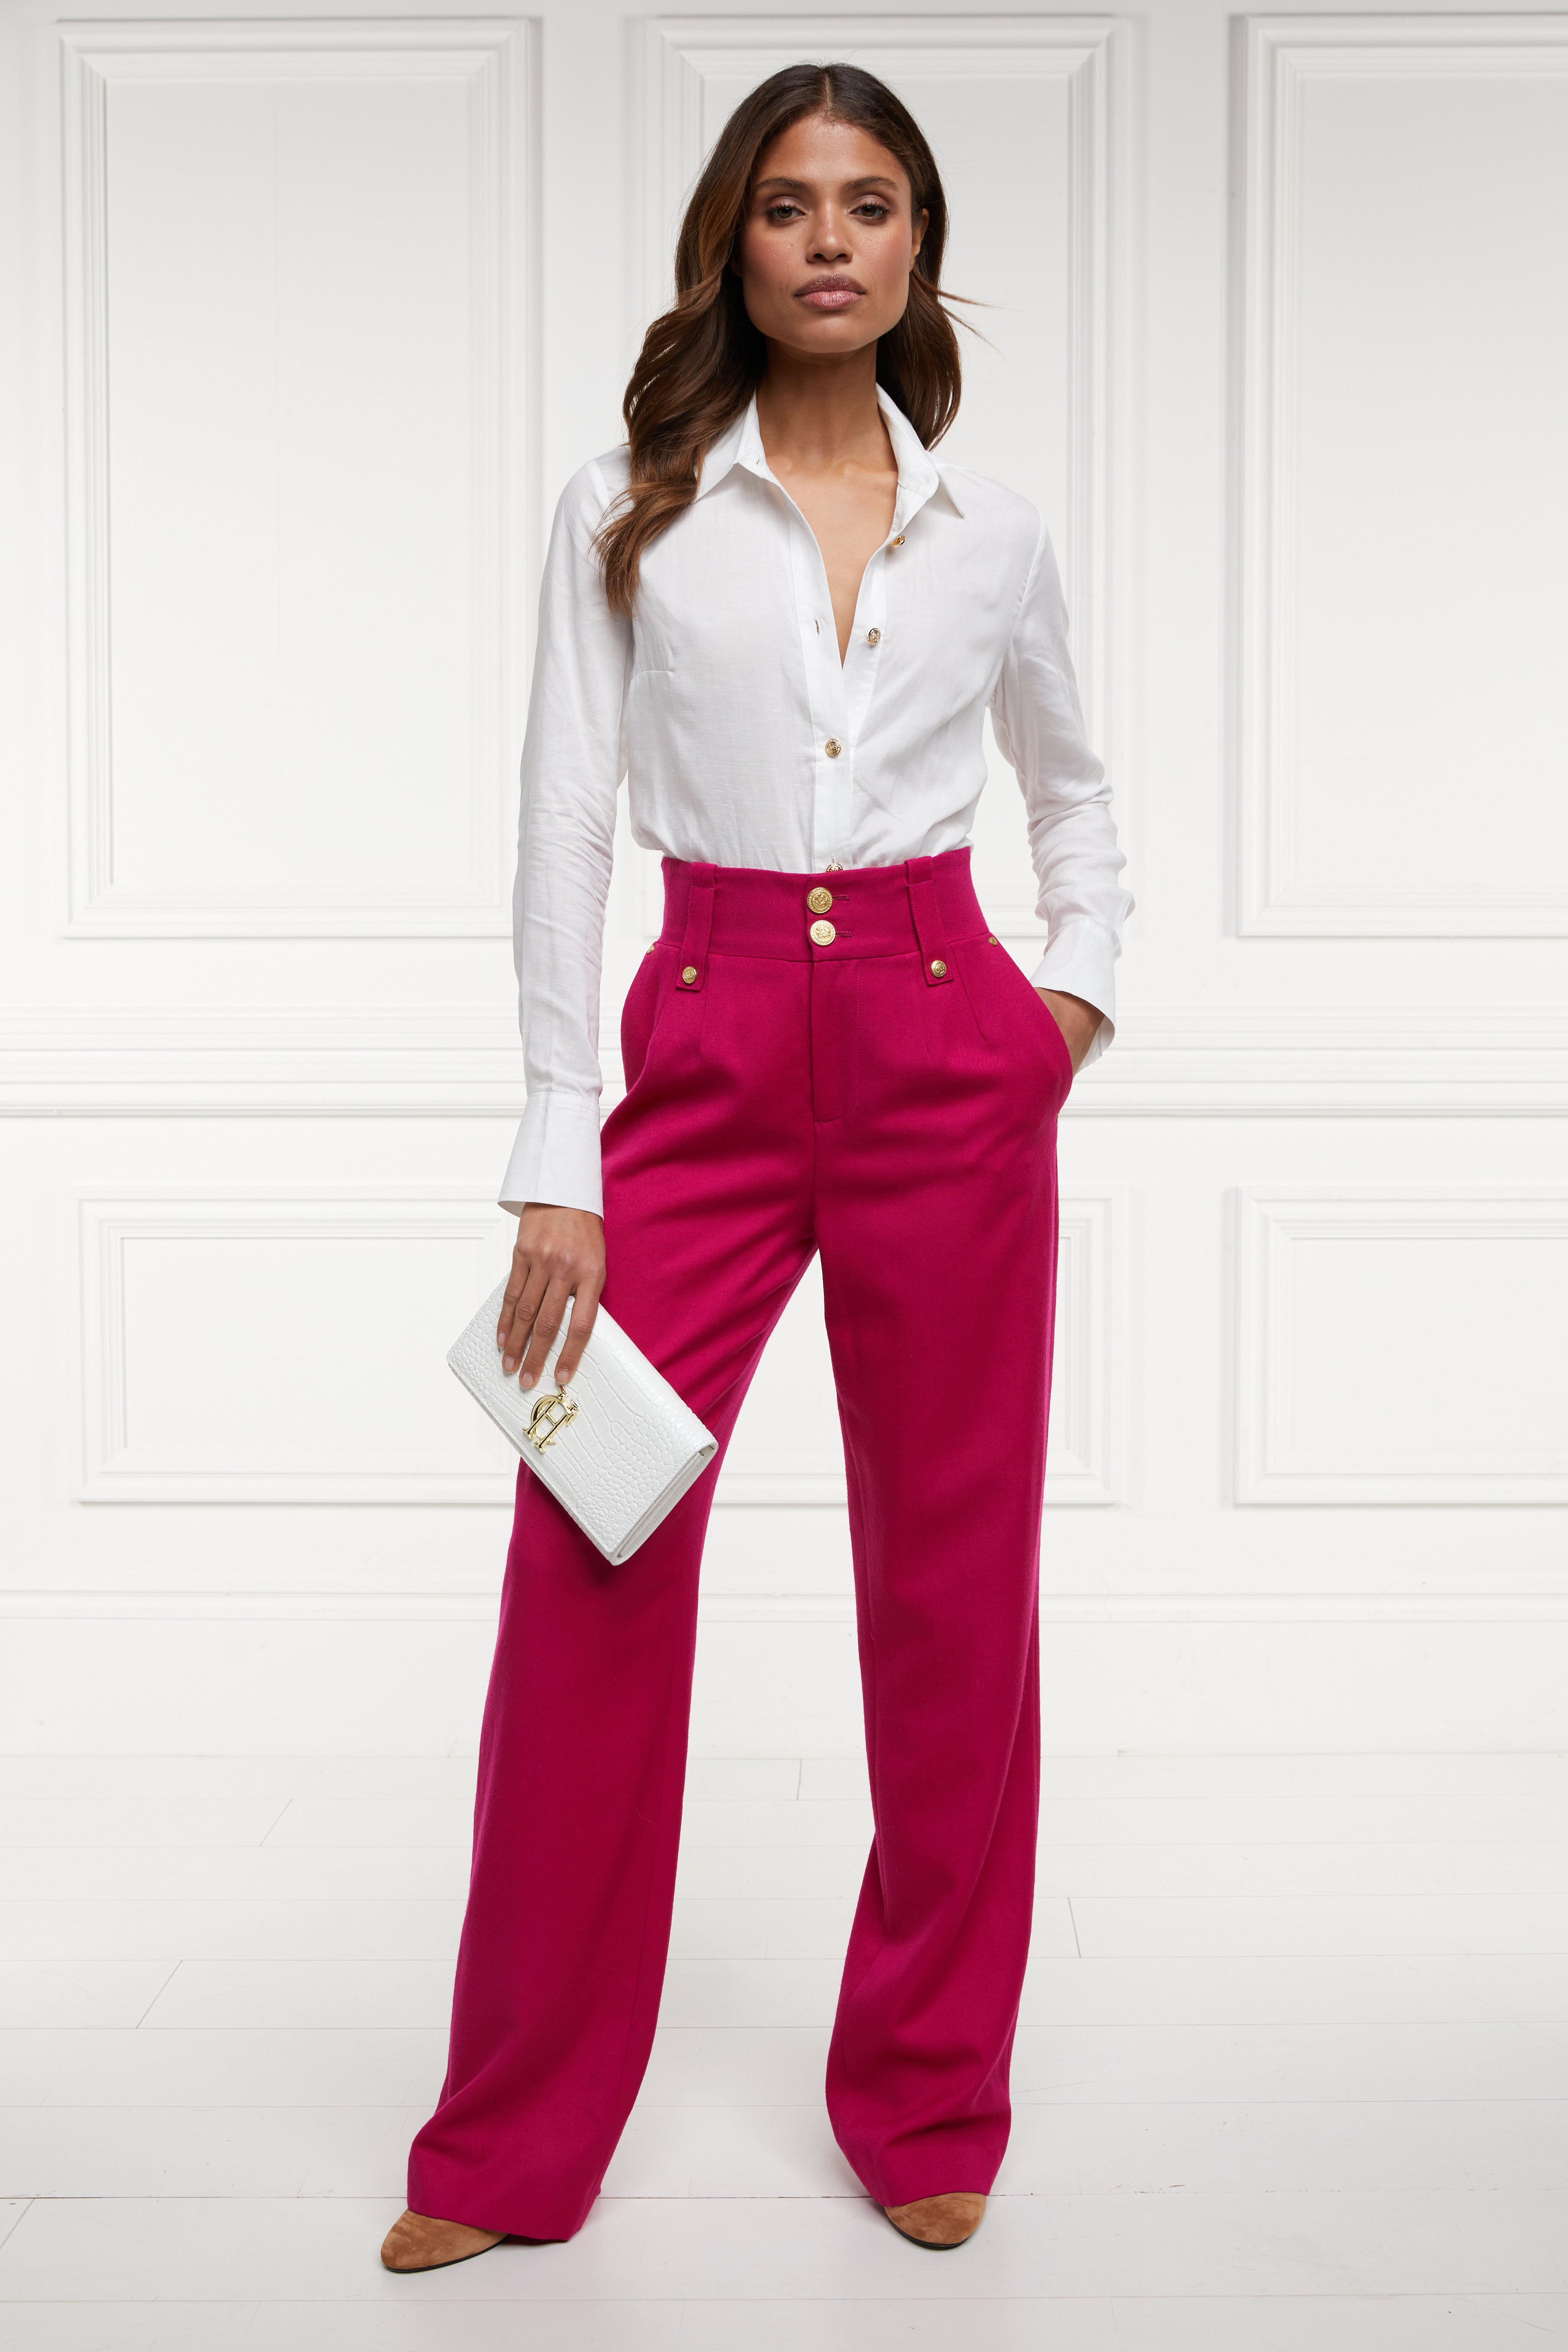 HOT Louis Vuitton Rose Sweatshirt And Pant For Women